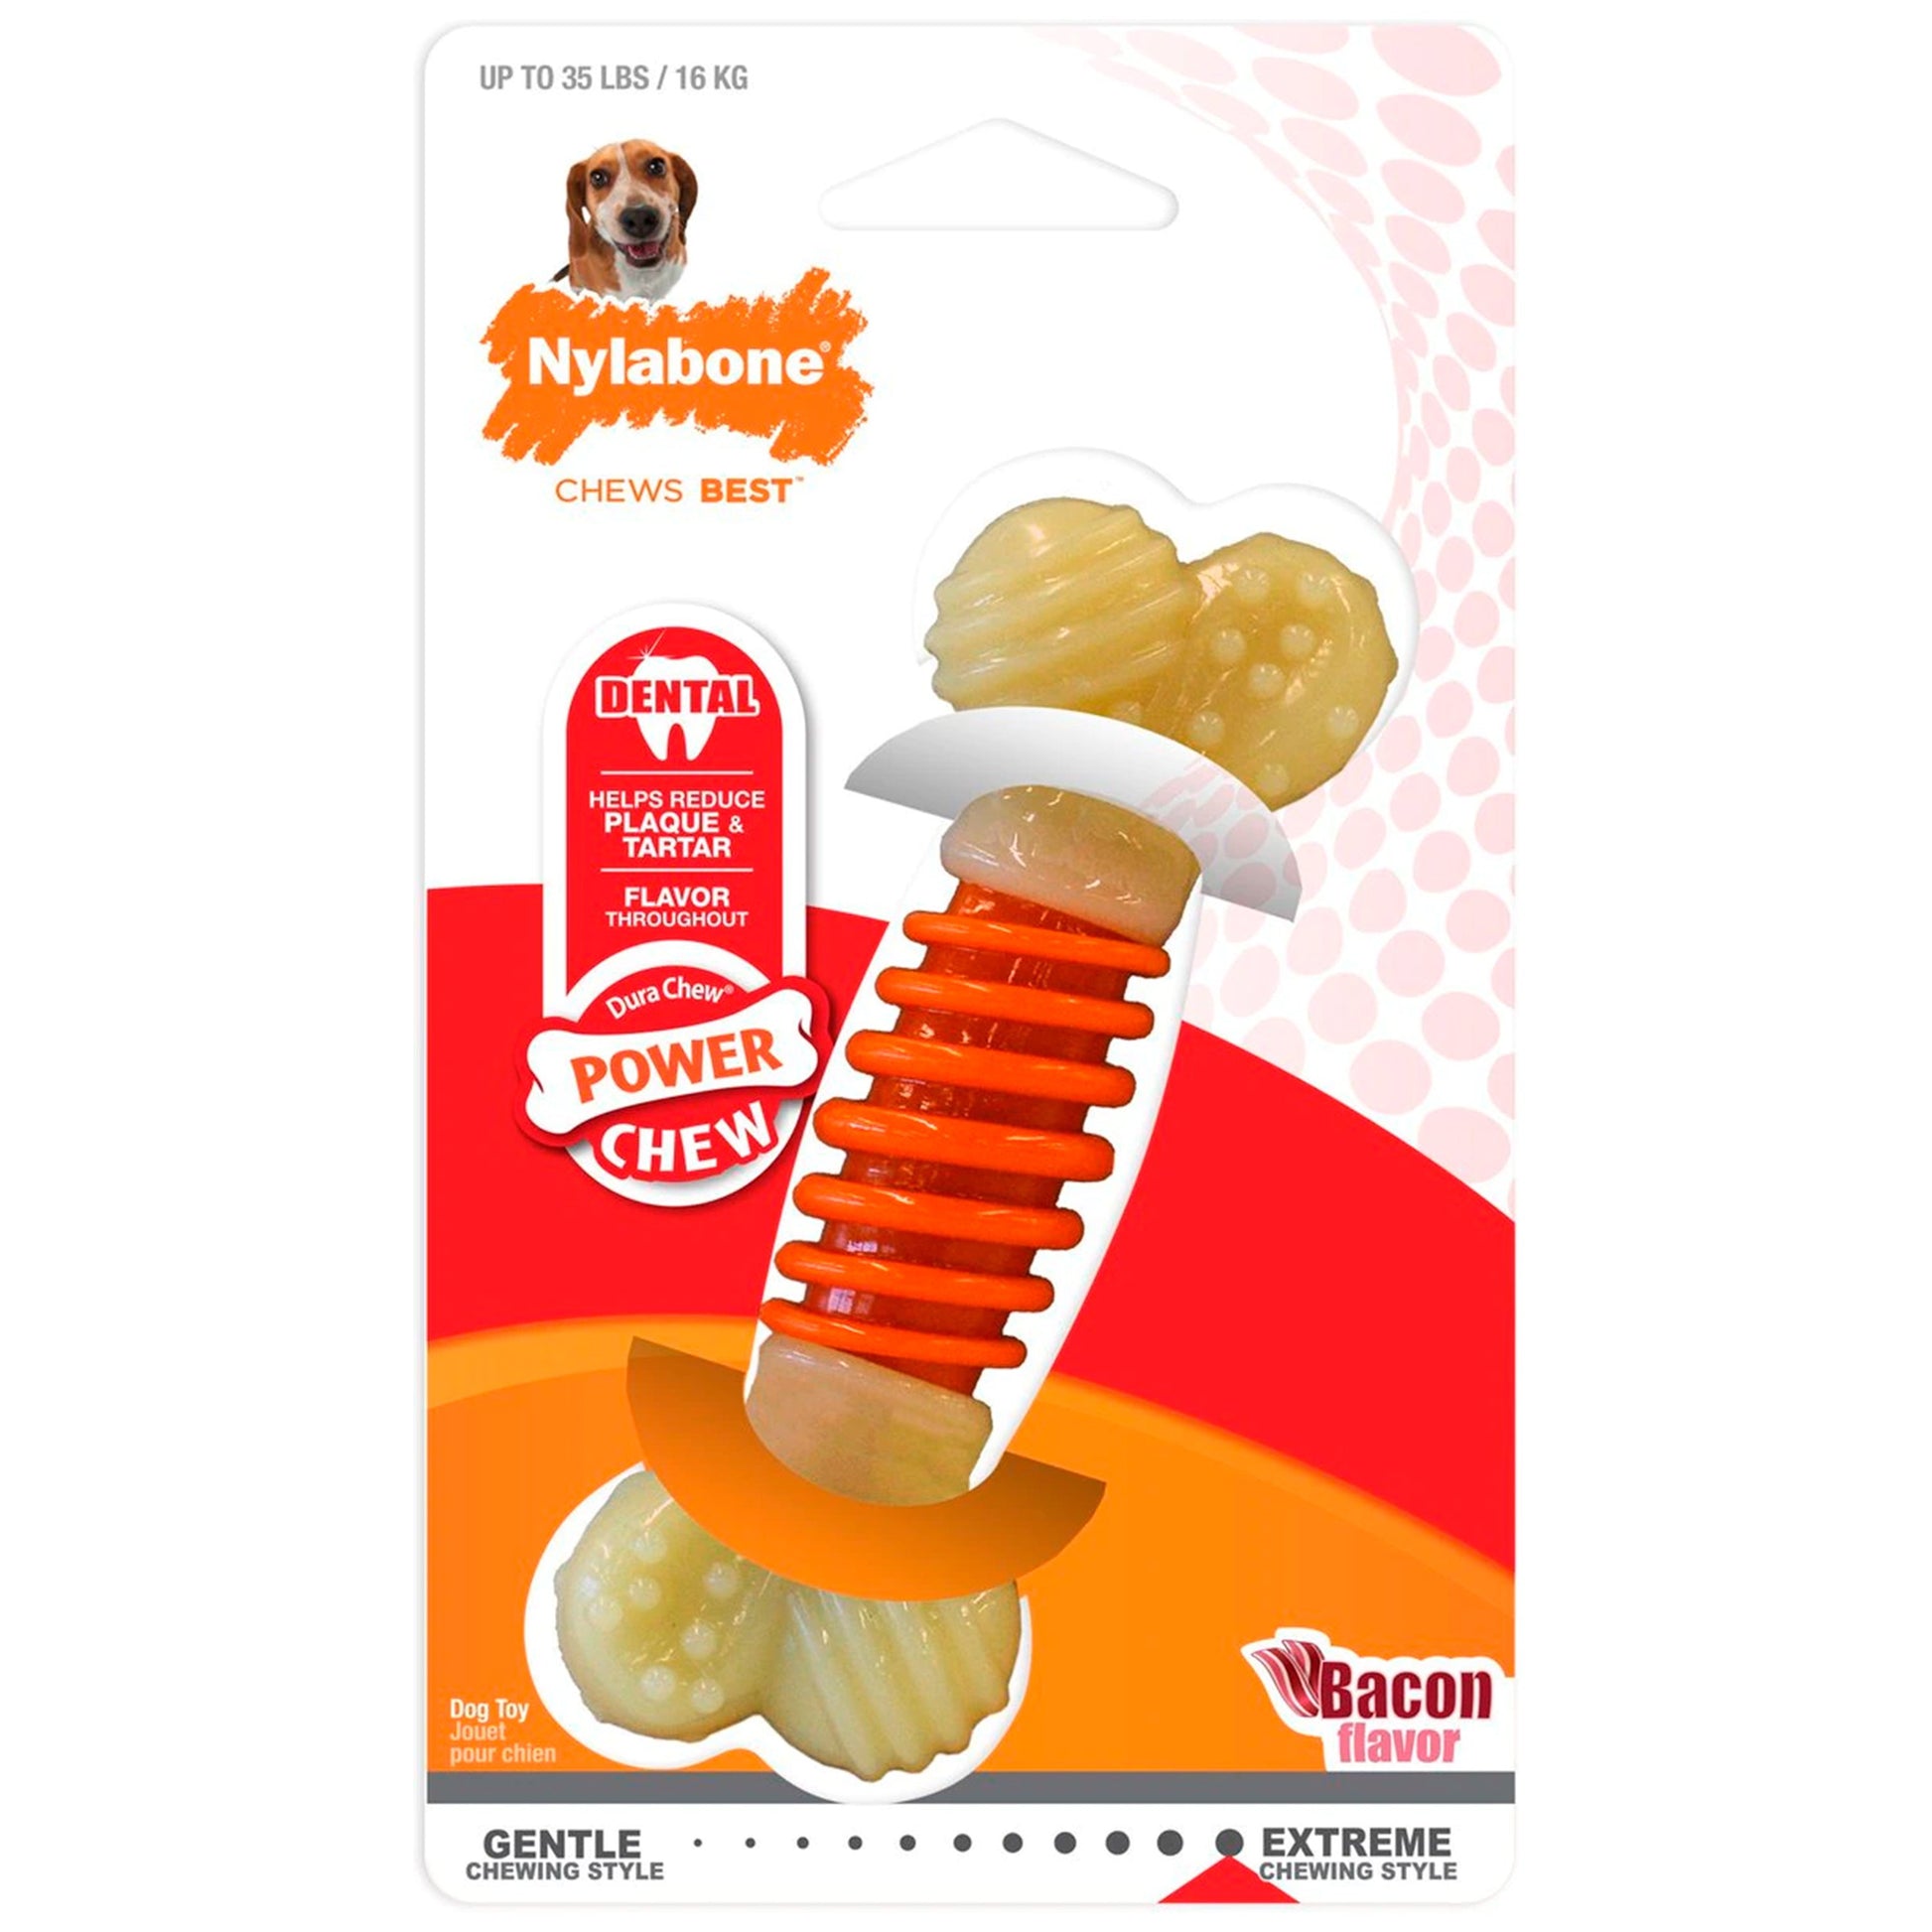 Nylabone PRO Action Dental Power Chew Durable Dog Toy Bacon Flavor Medium/Wolf - Up To 35 lb, Nylabone